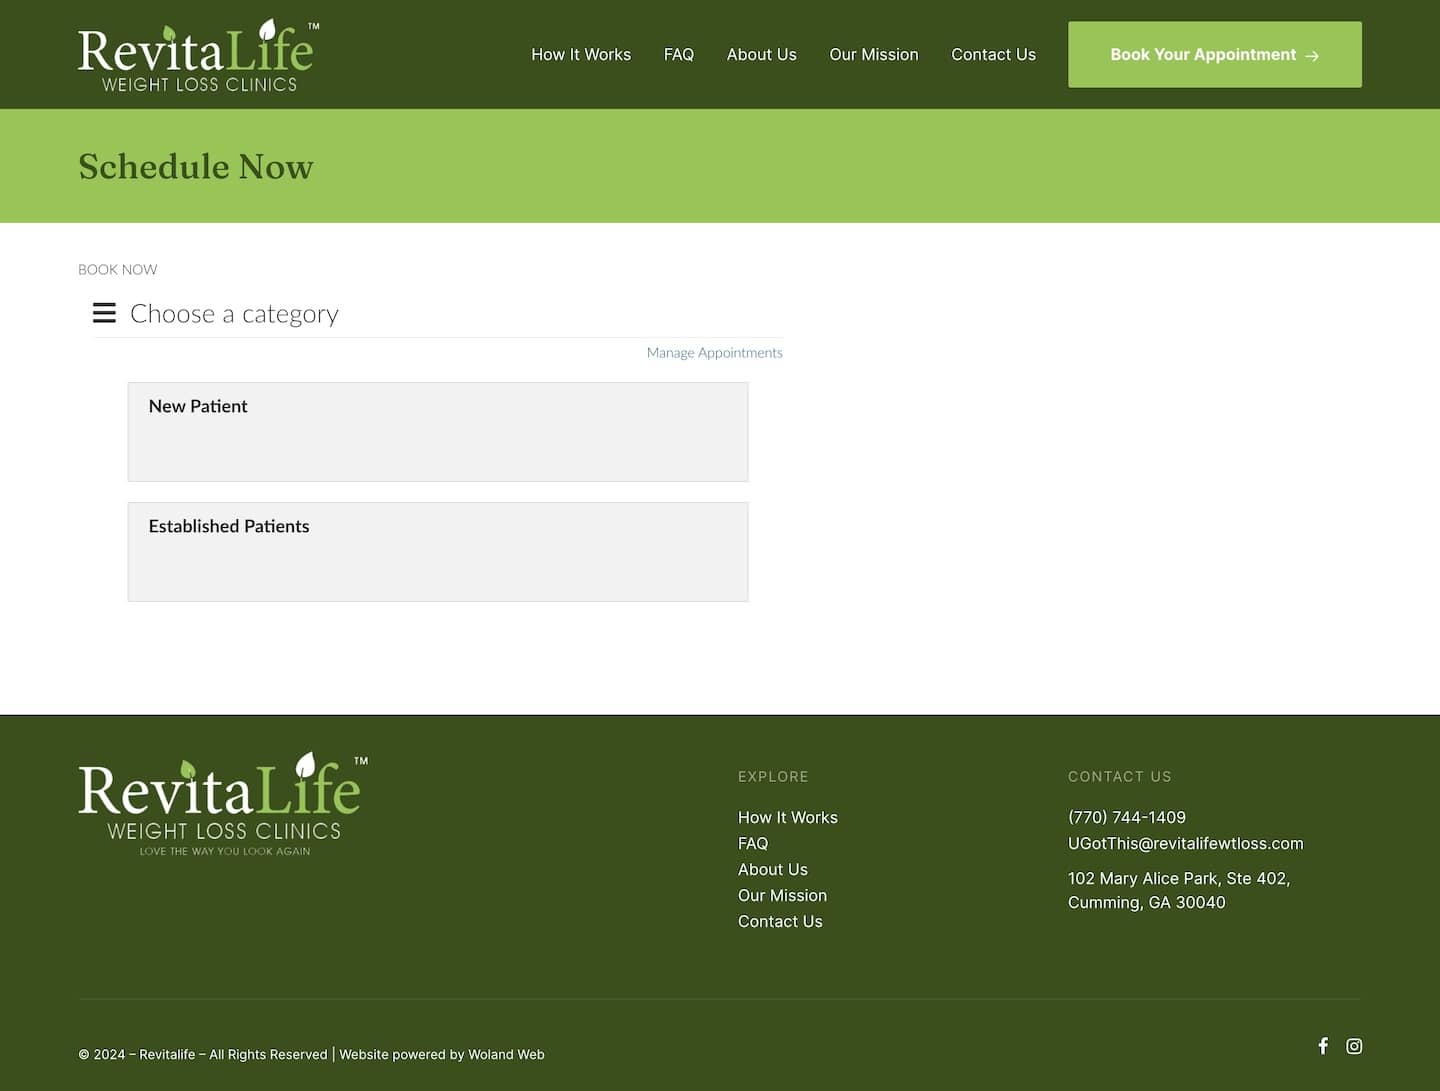 Revitalife website-screenshot of scheduling page